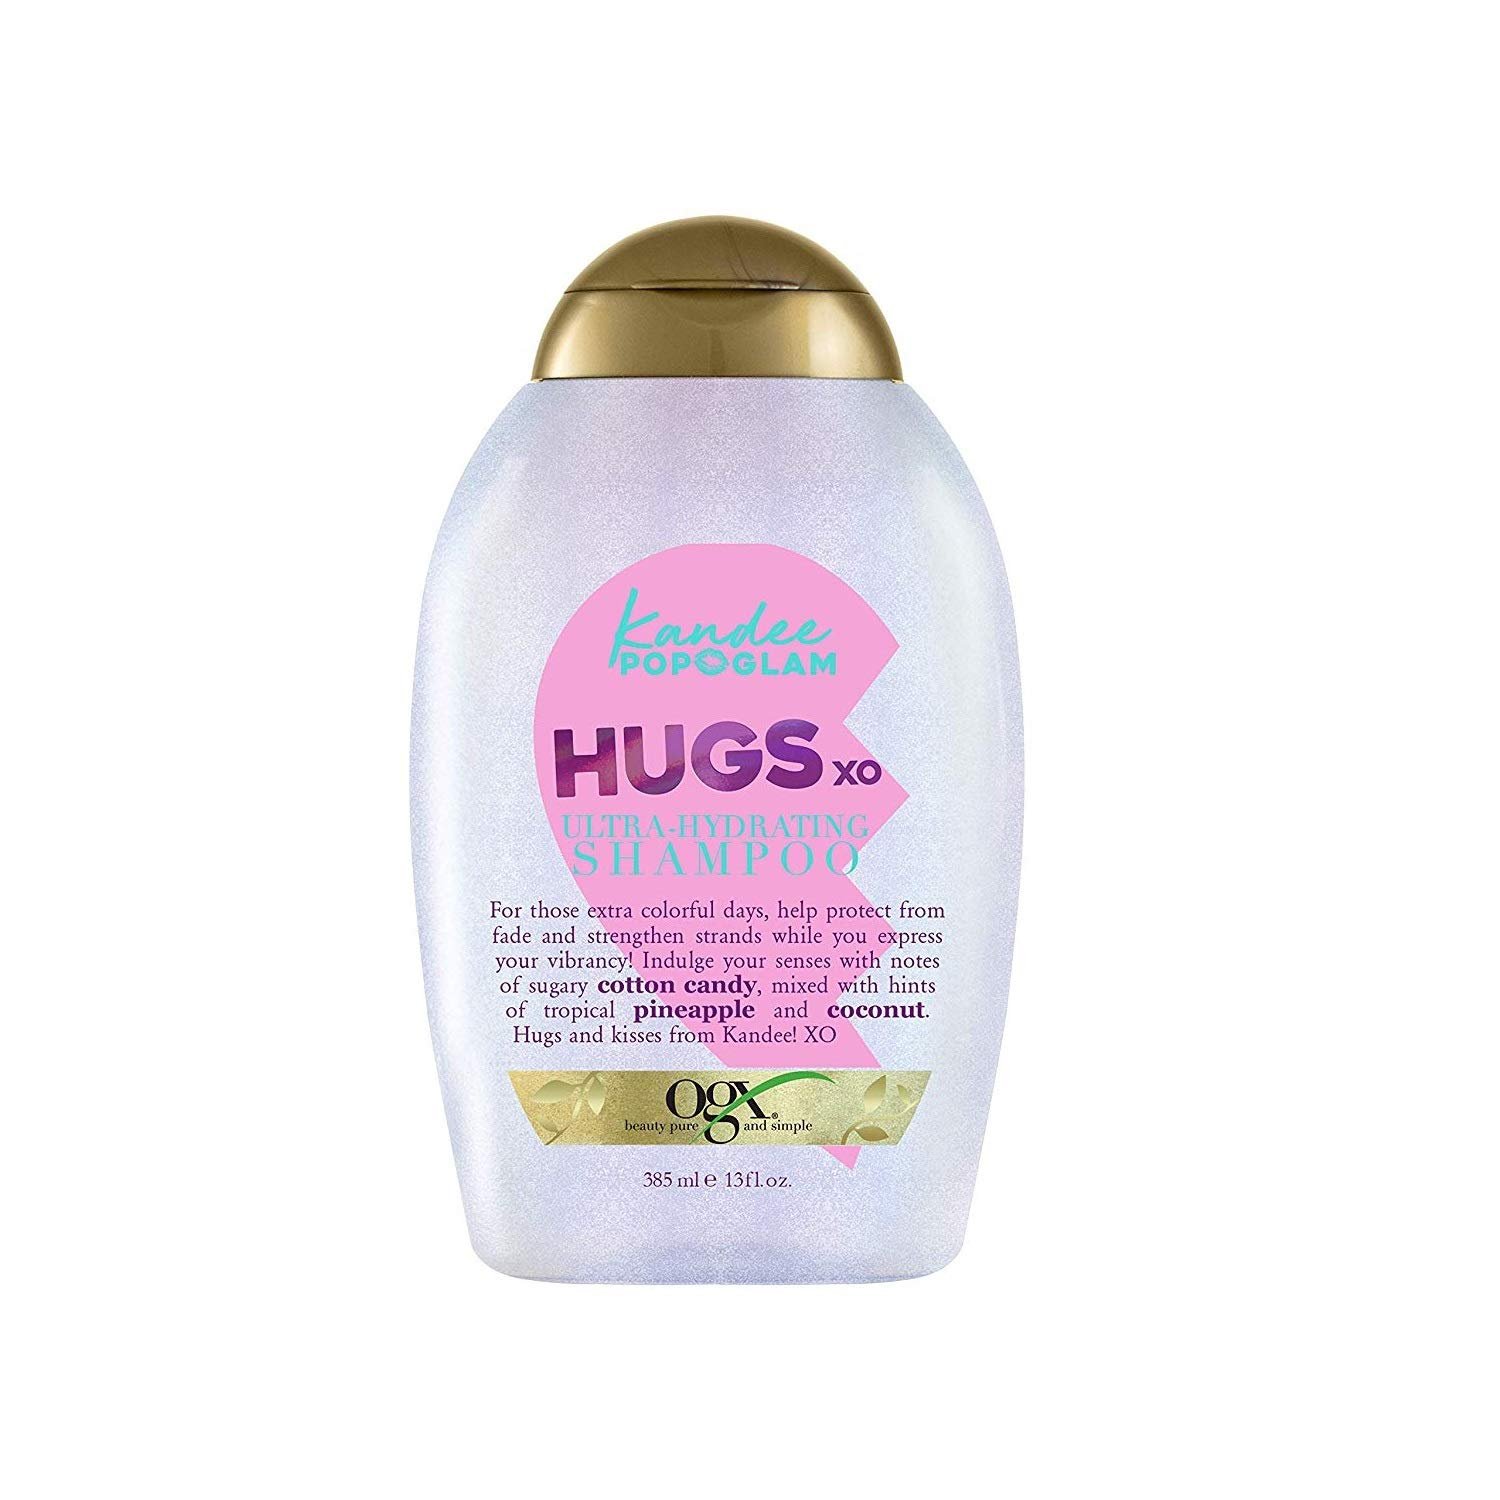 Ogx Kandee Johnson Hugs and Kisses Shampoo